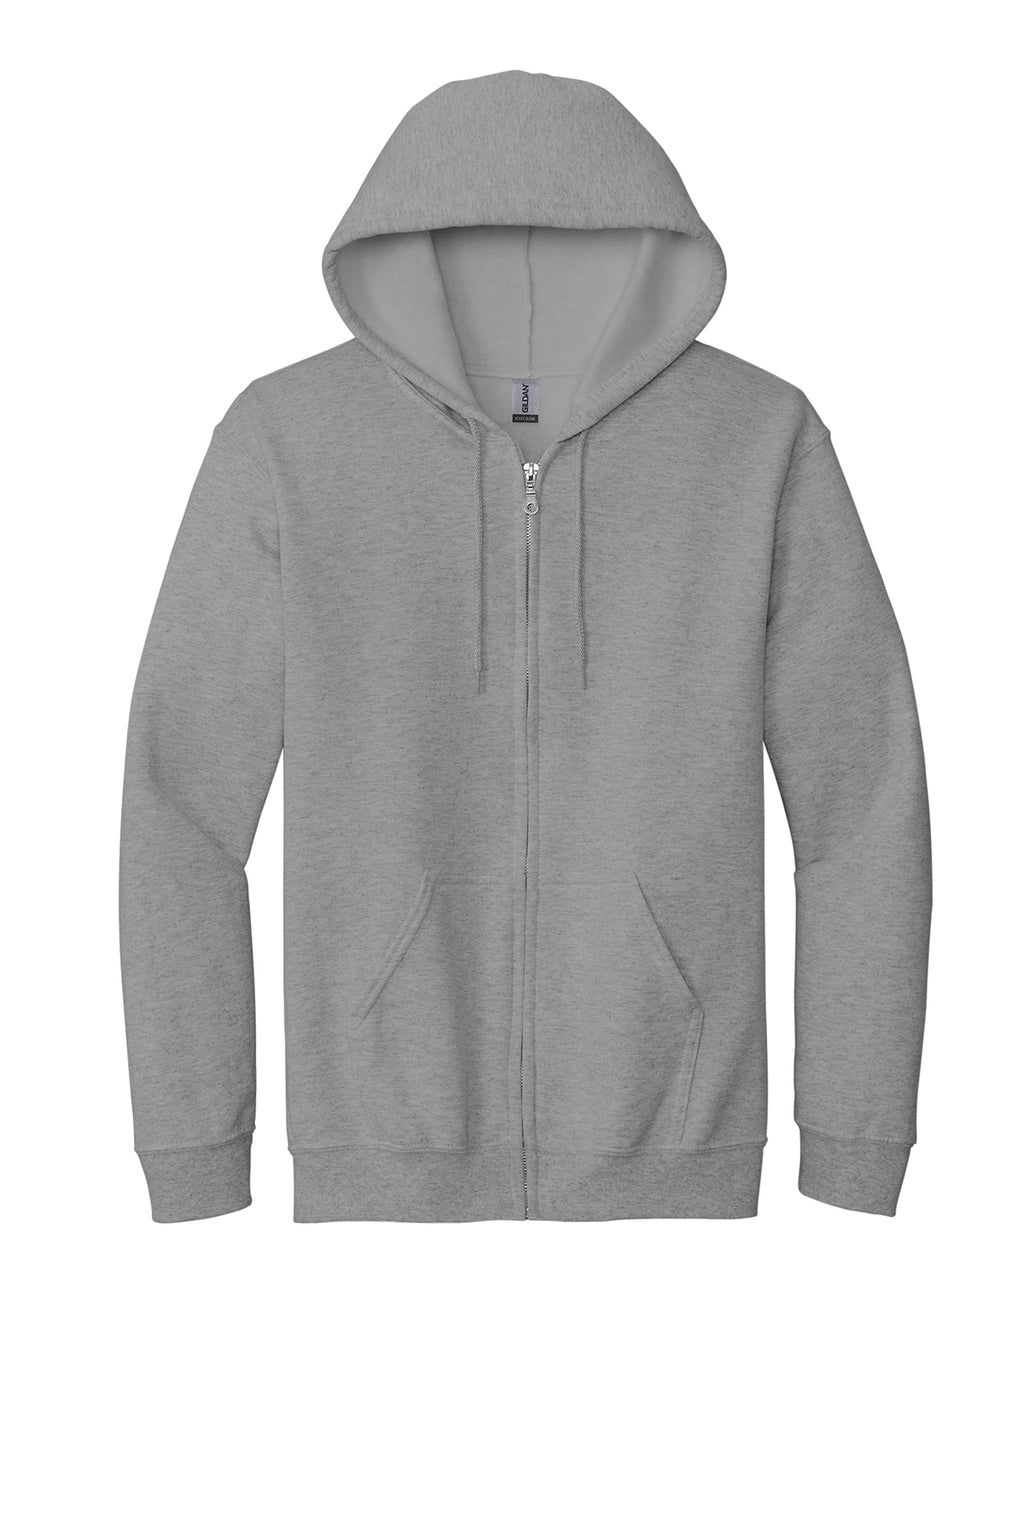 Gildan Full-Zip Hooded Sweatshirt Mens/Unisex Hoodies Sport Grey